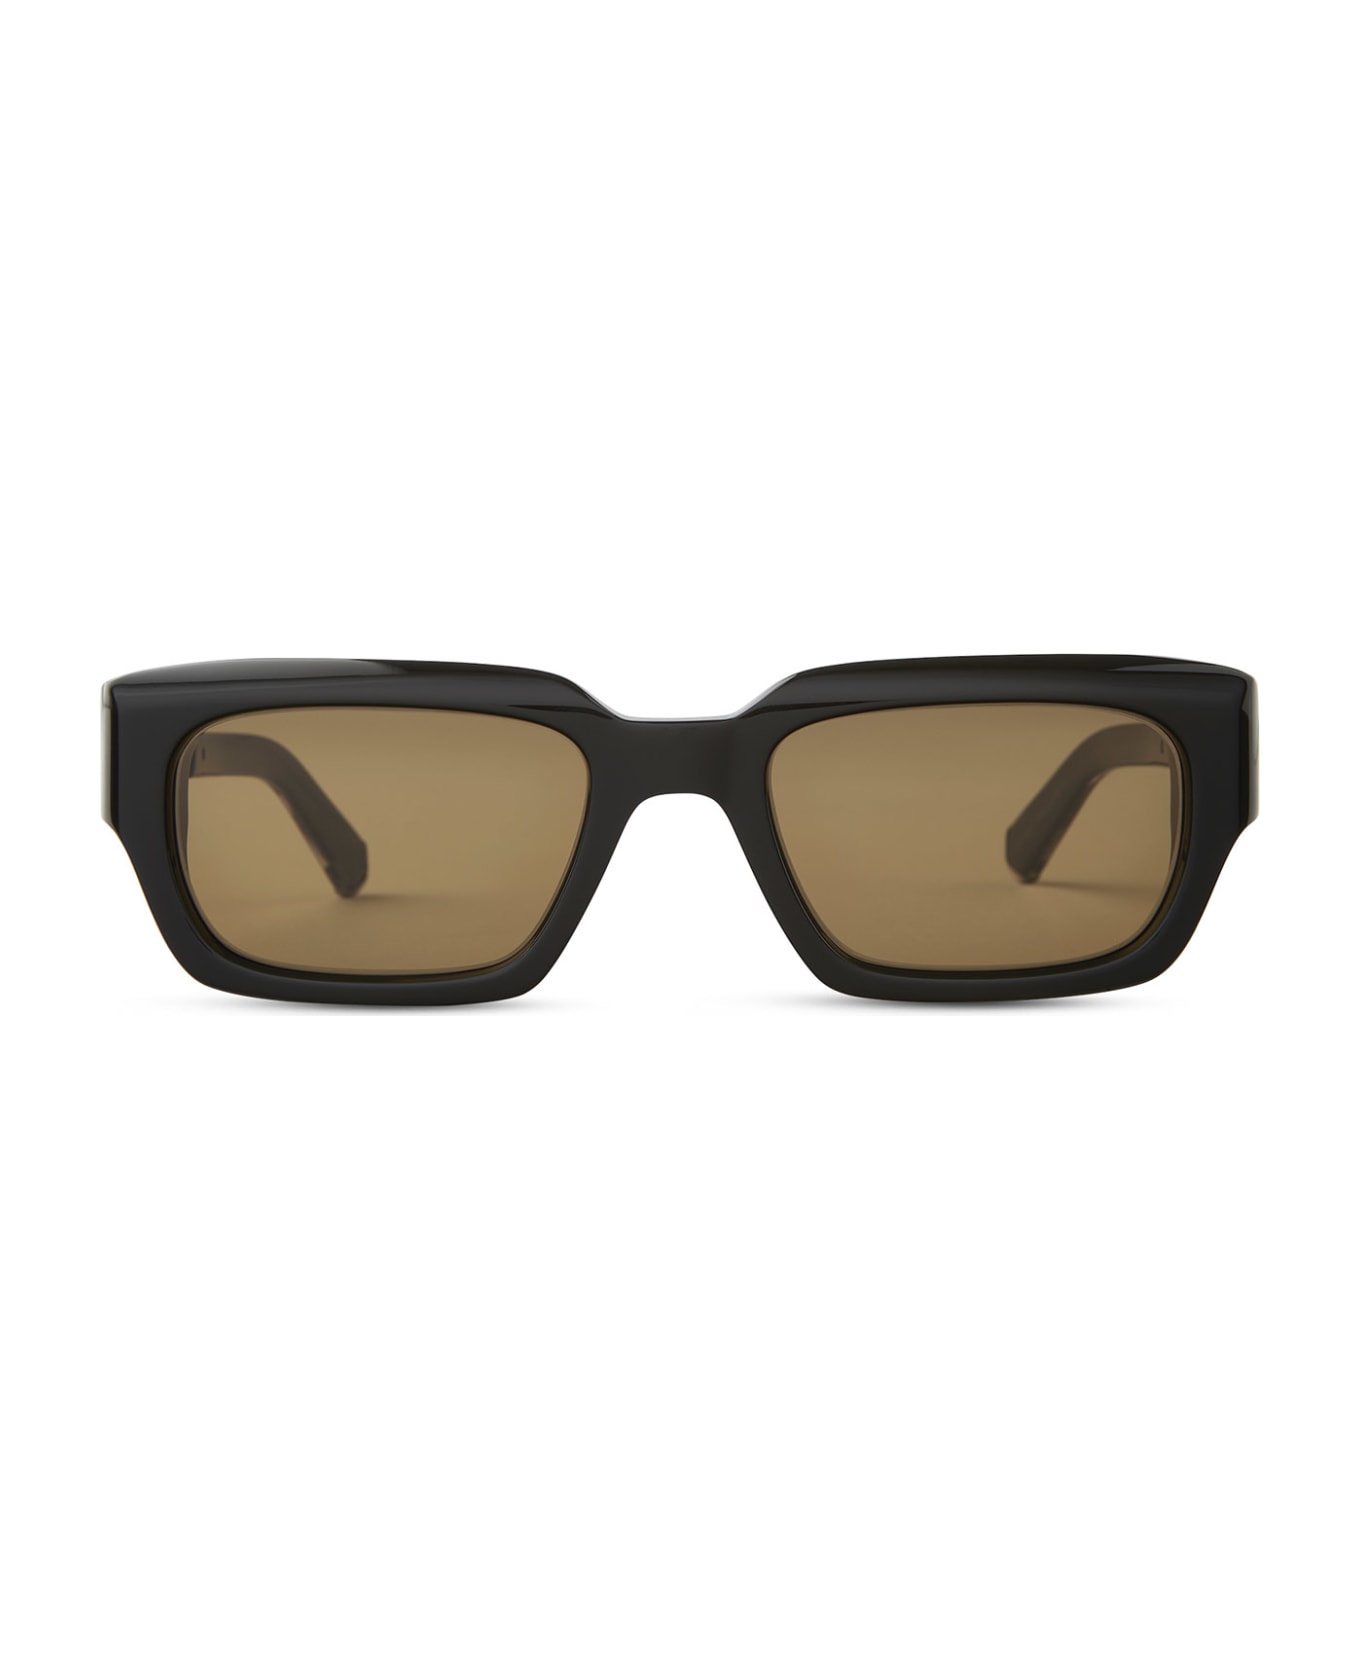 Mr. Leight Maverick S Black-pewter Sunglasses -  Black-Pewter